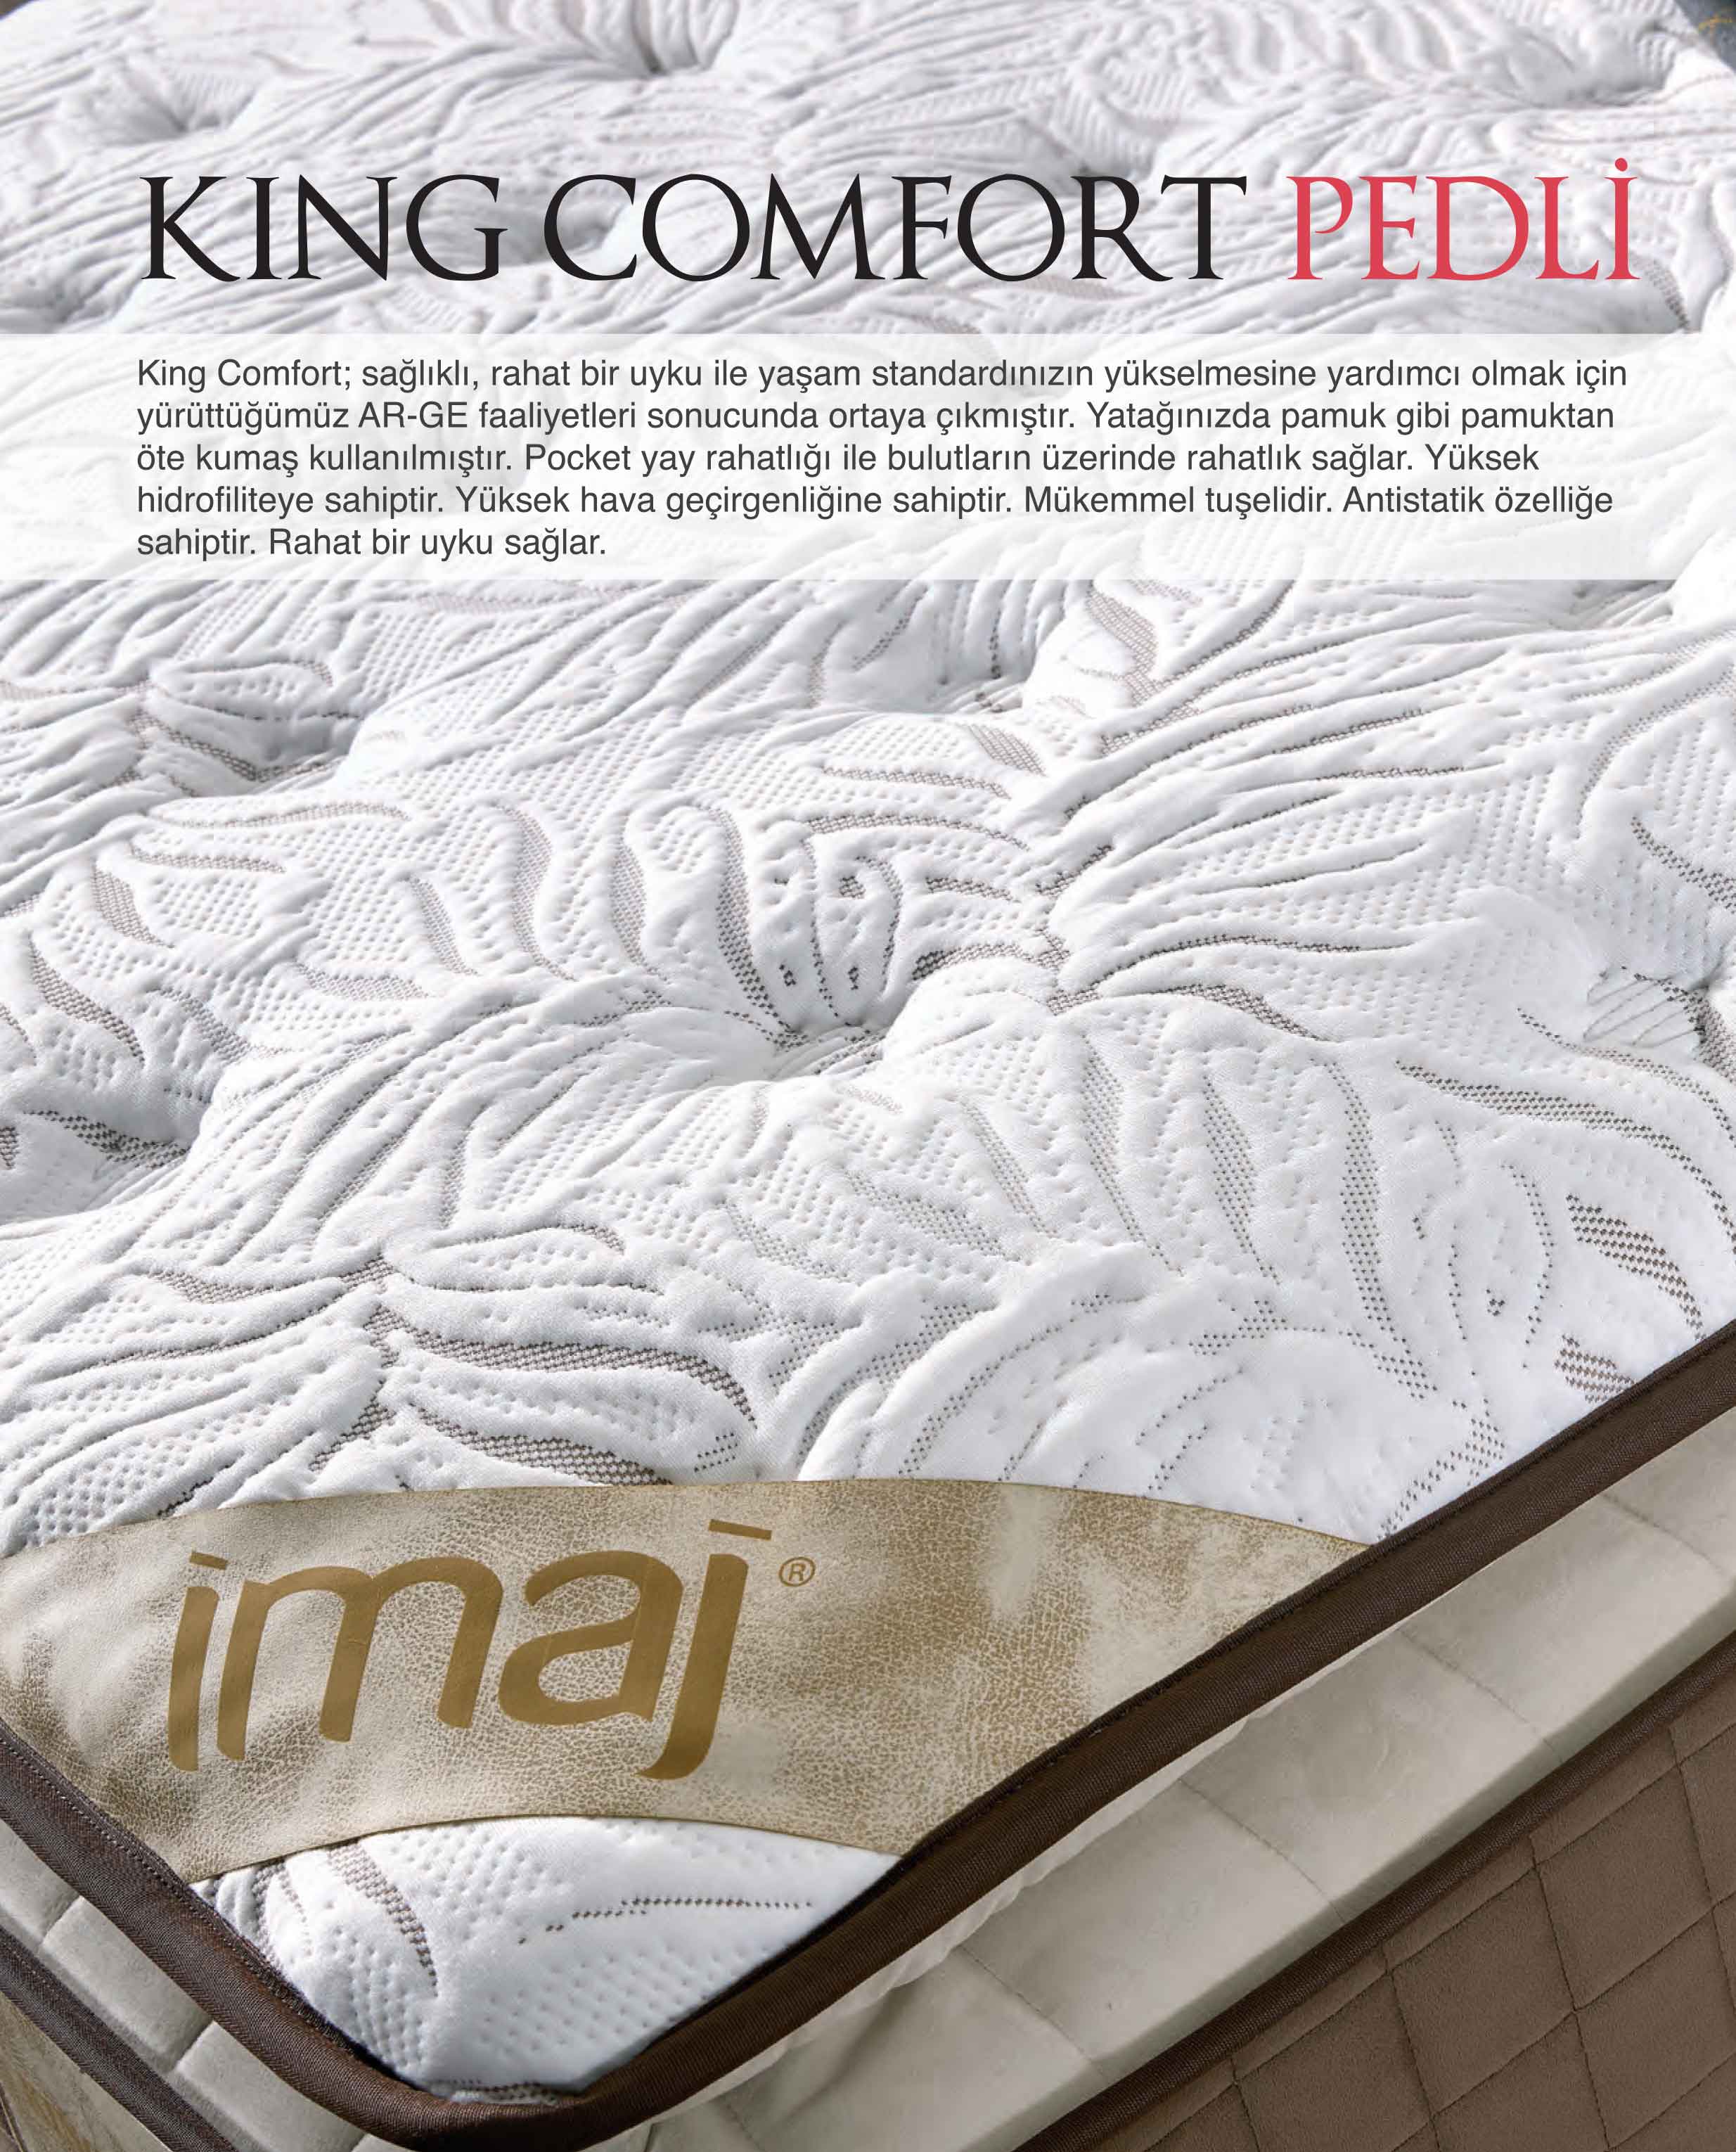 King Comfort Pedli